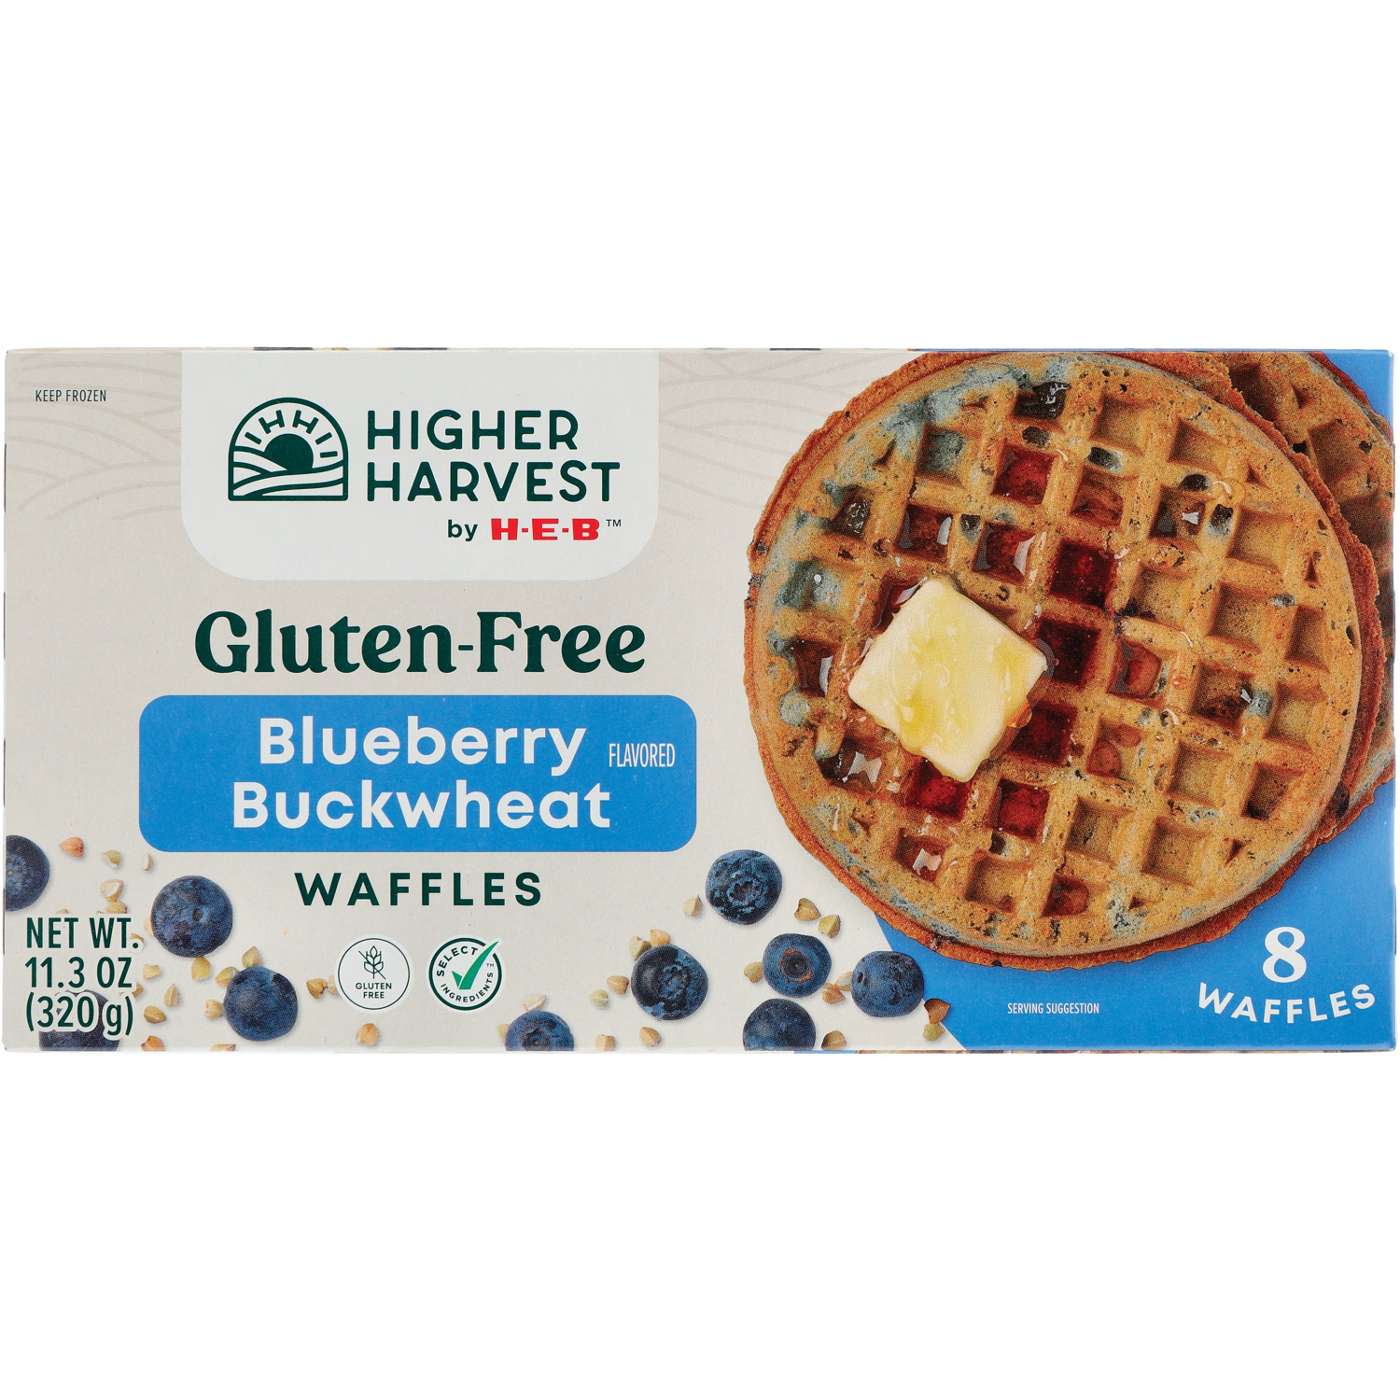 Higher Harvest by H-E-B Gluten-Free Frozen Waffles – Blueberry Buckwheat; image 1 of 2